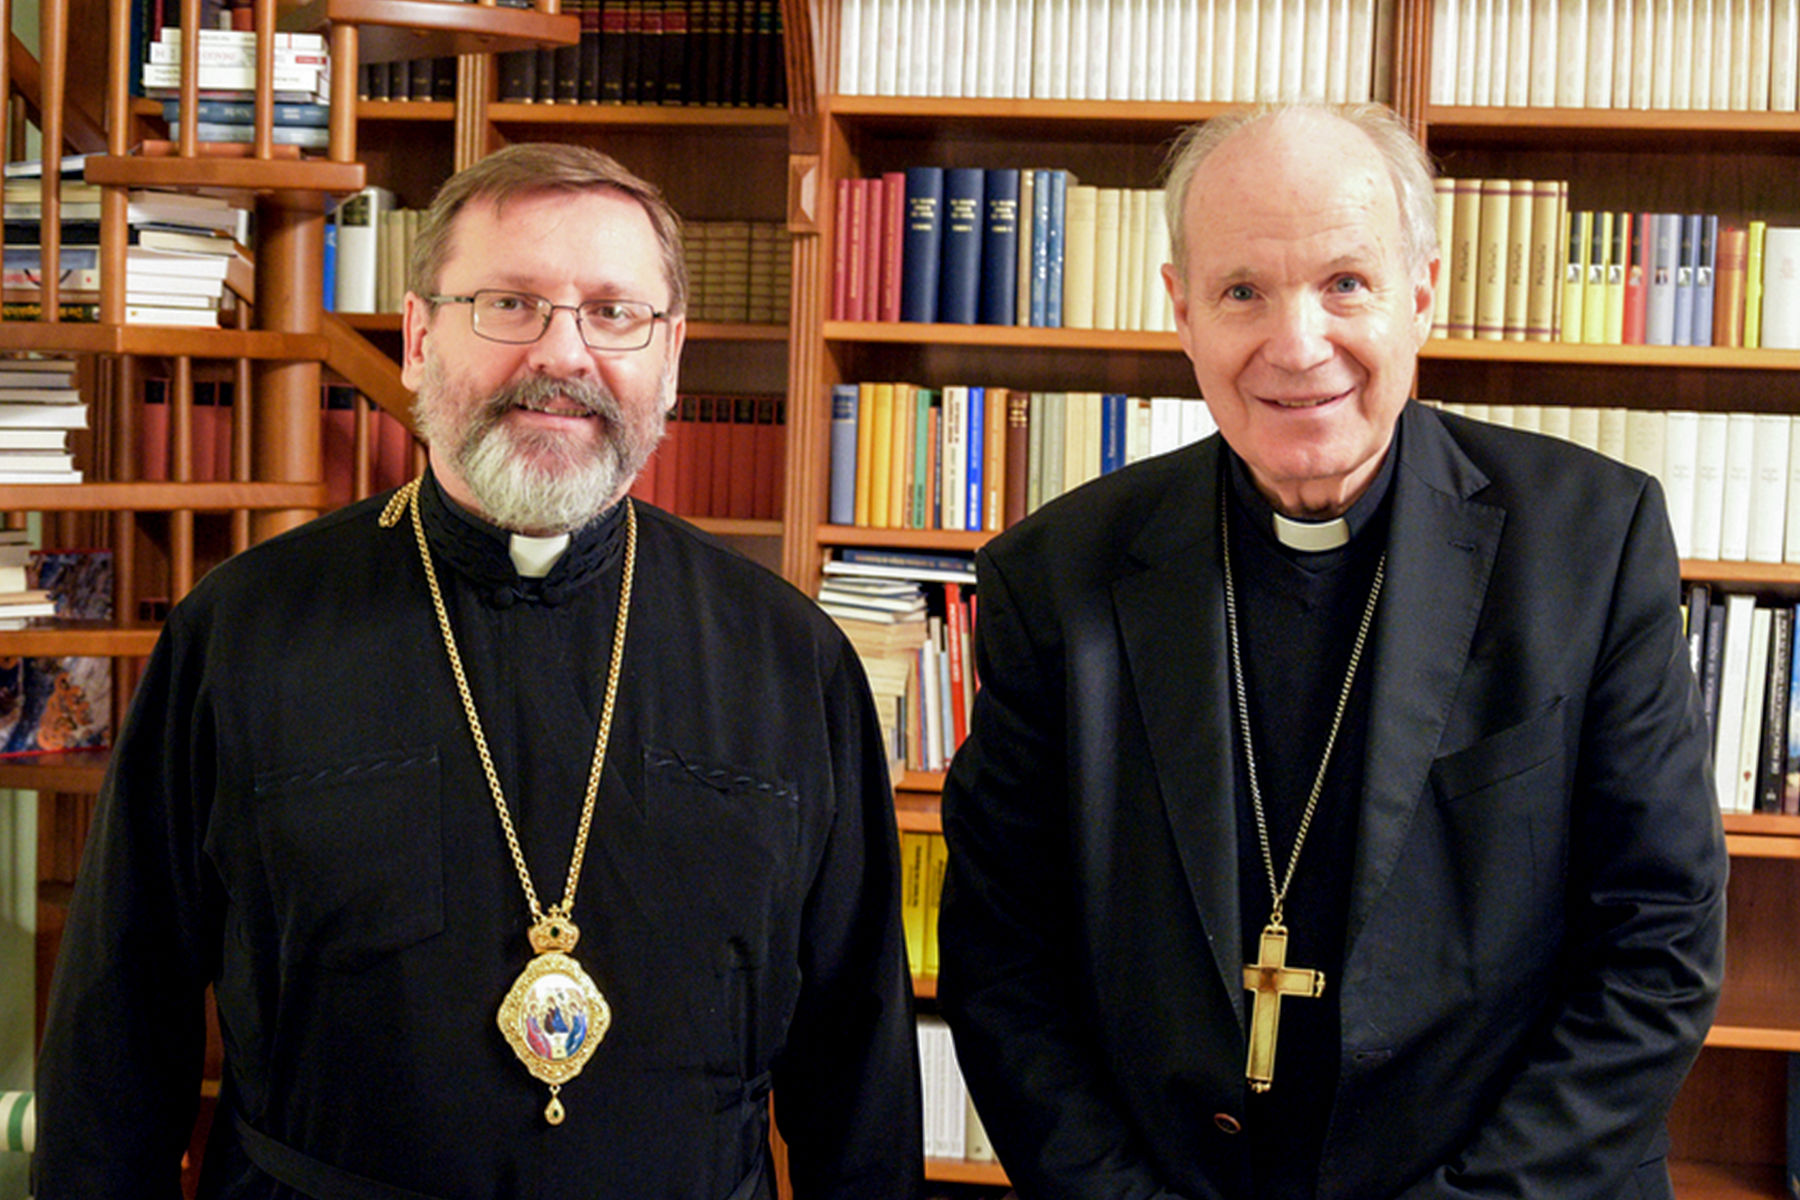 His Beatitude Sviatoslav met in Vienna with Cardinal Christoph Schönborn